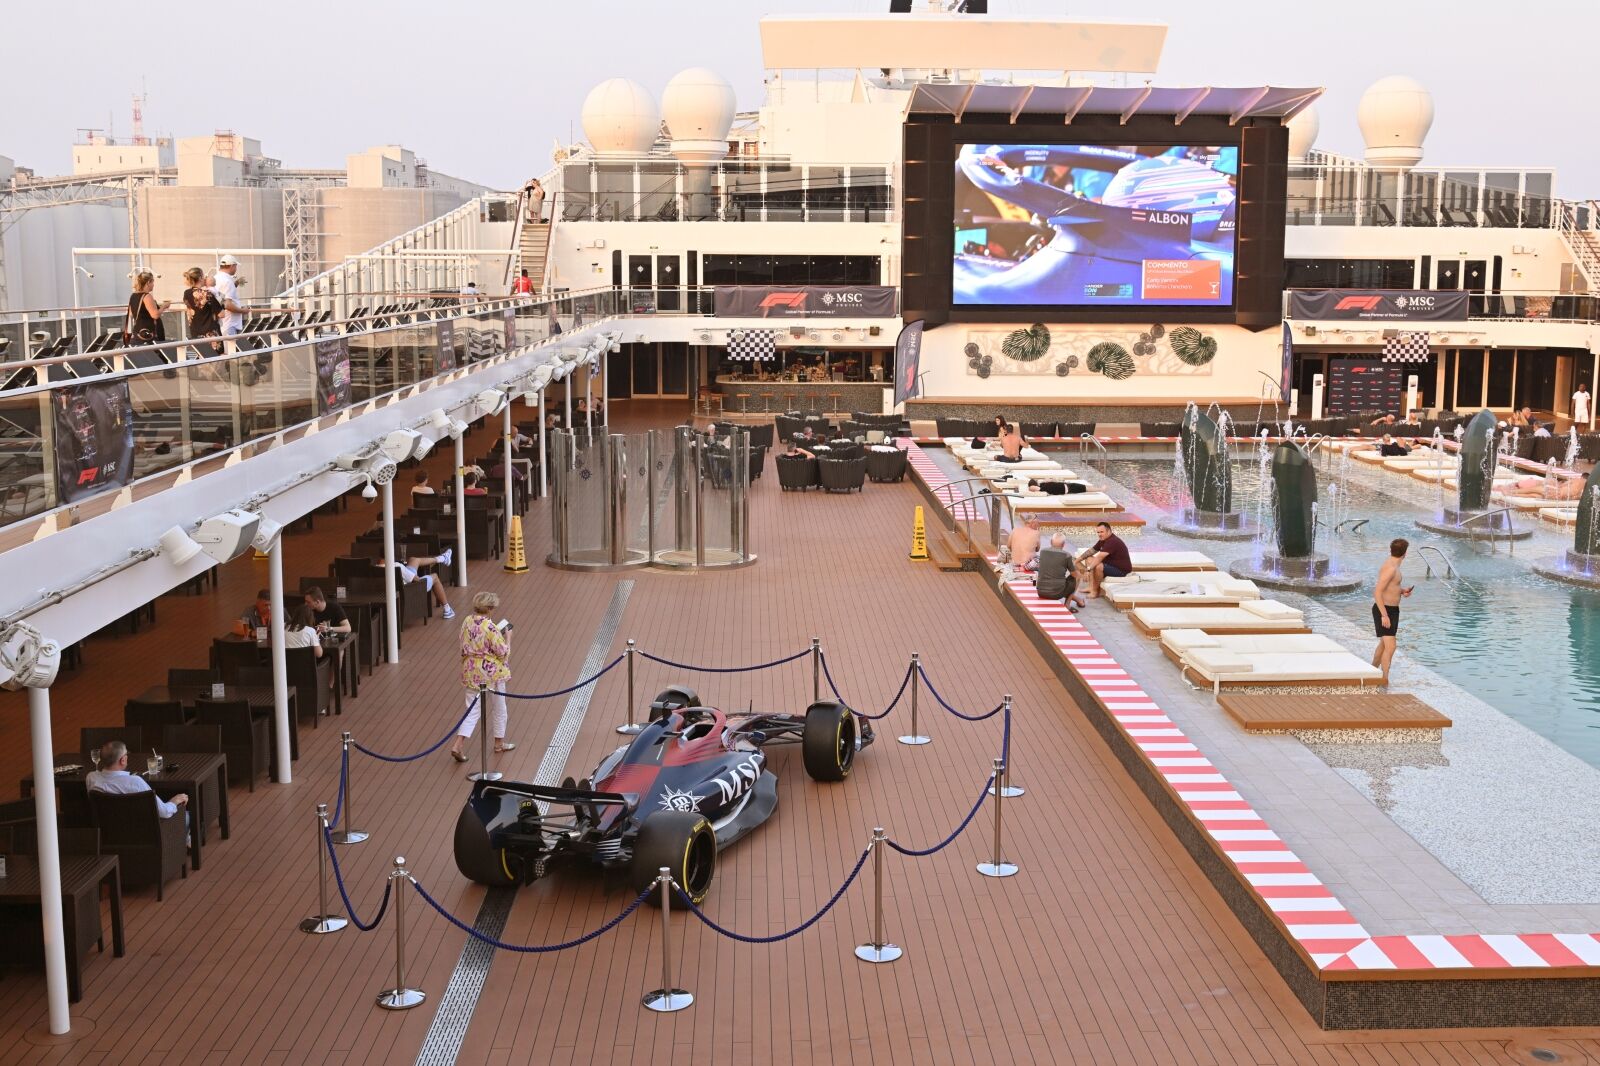 Atmosphere Pool with MSC F1 car